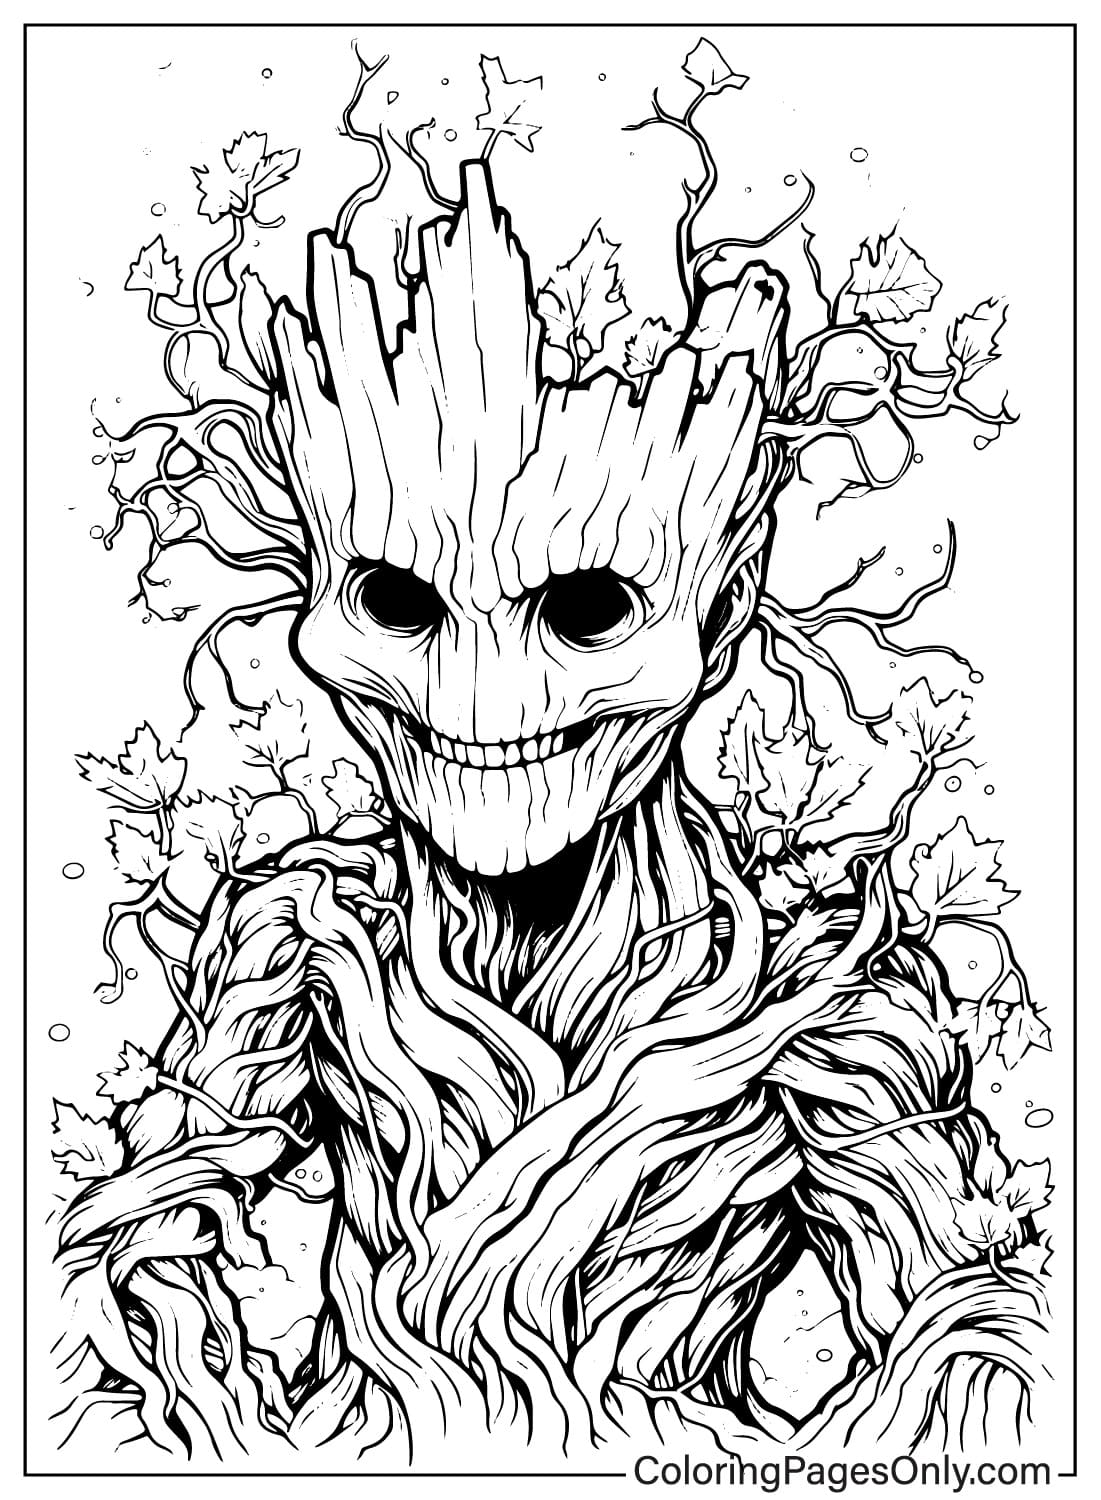 Página para colorir do Groot do Groot